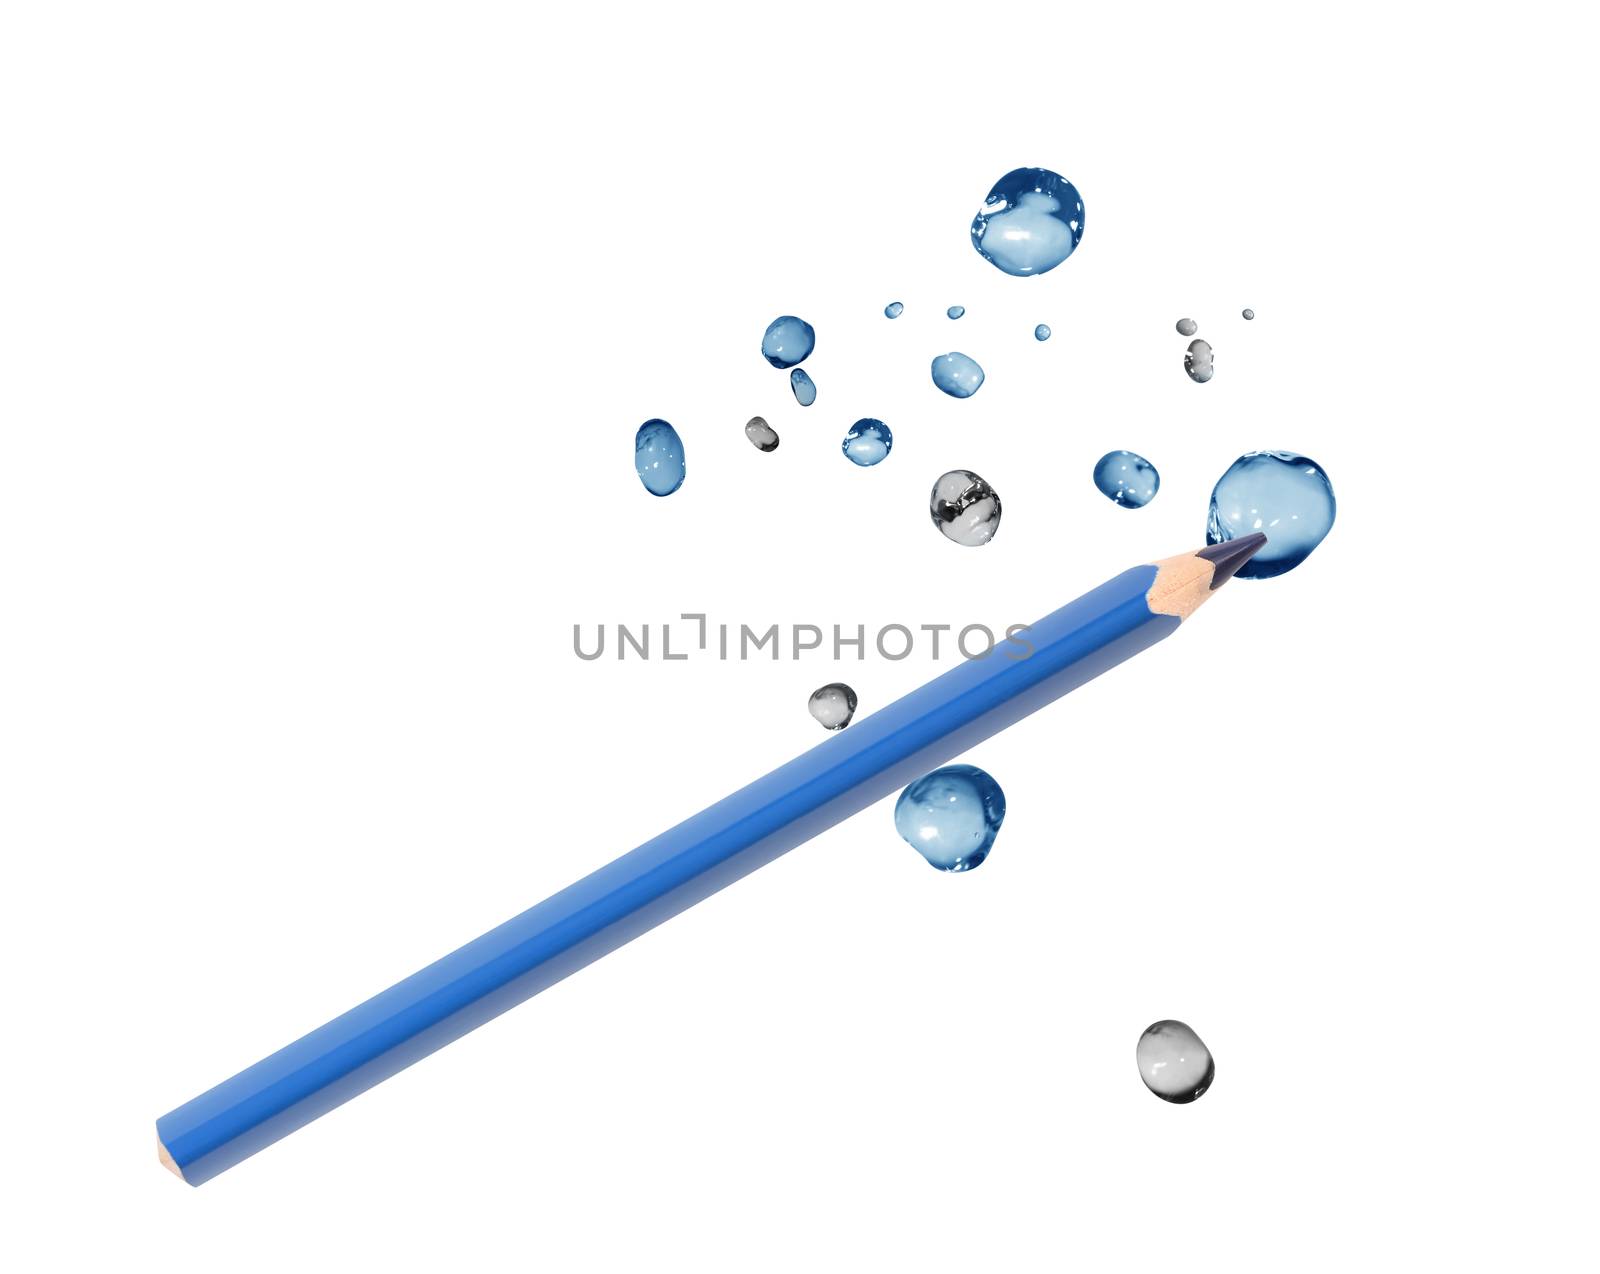 Pencil Draws Water by kvkirillov